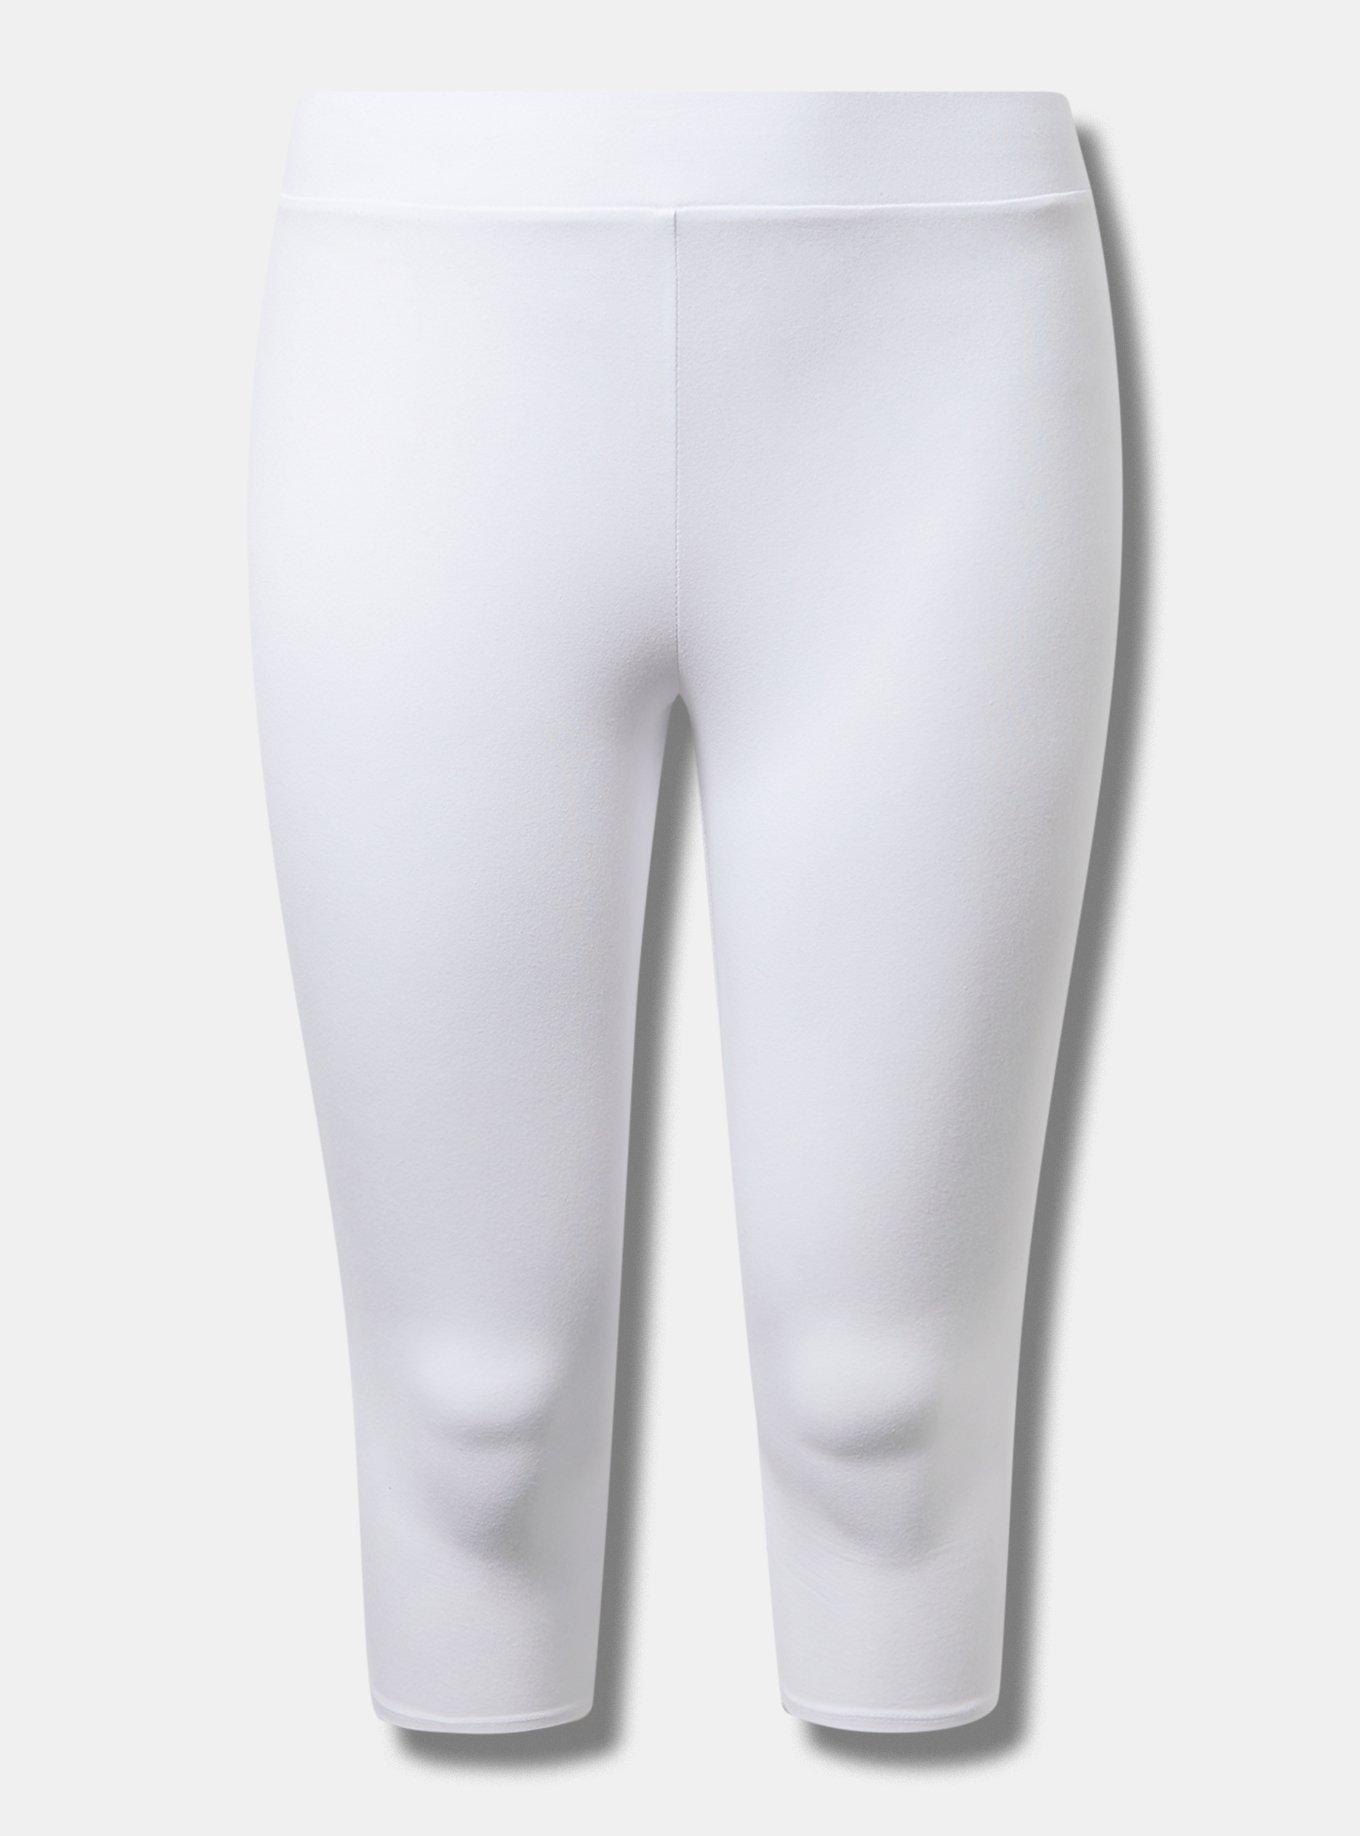 Premium Cotton Capri Length Leggings Yoga Pants Stretchy Basic Everyday